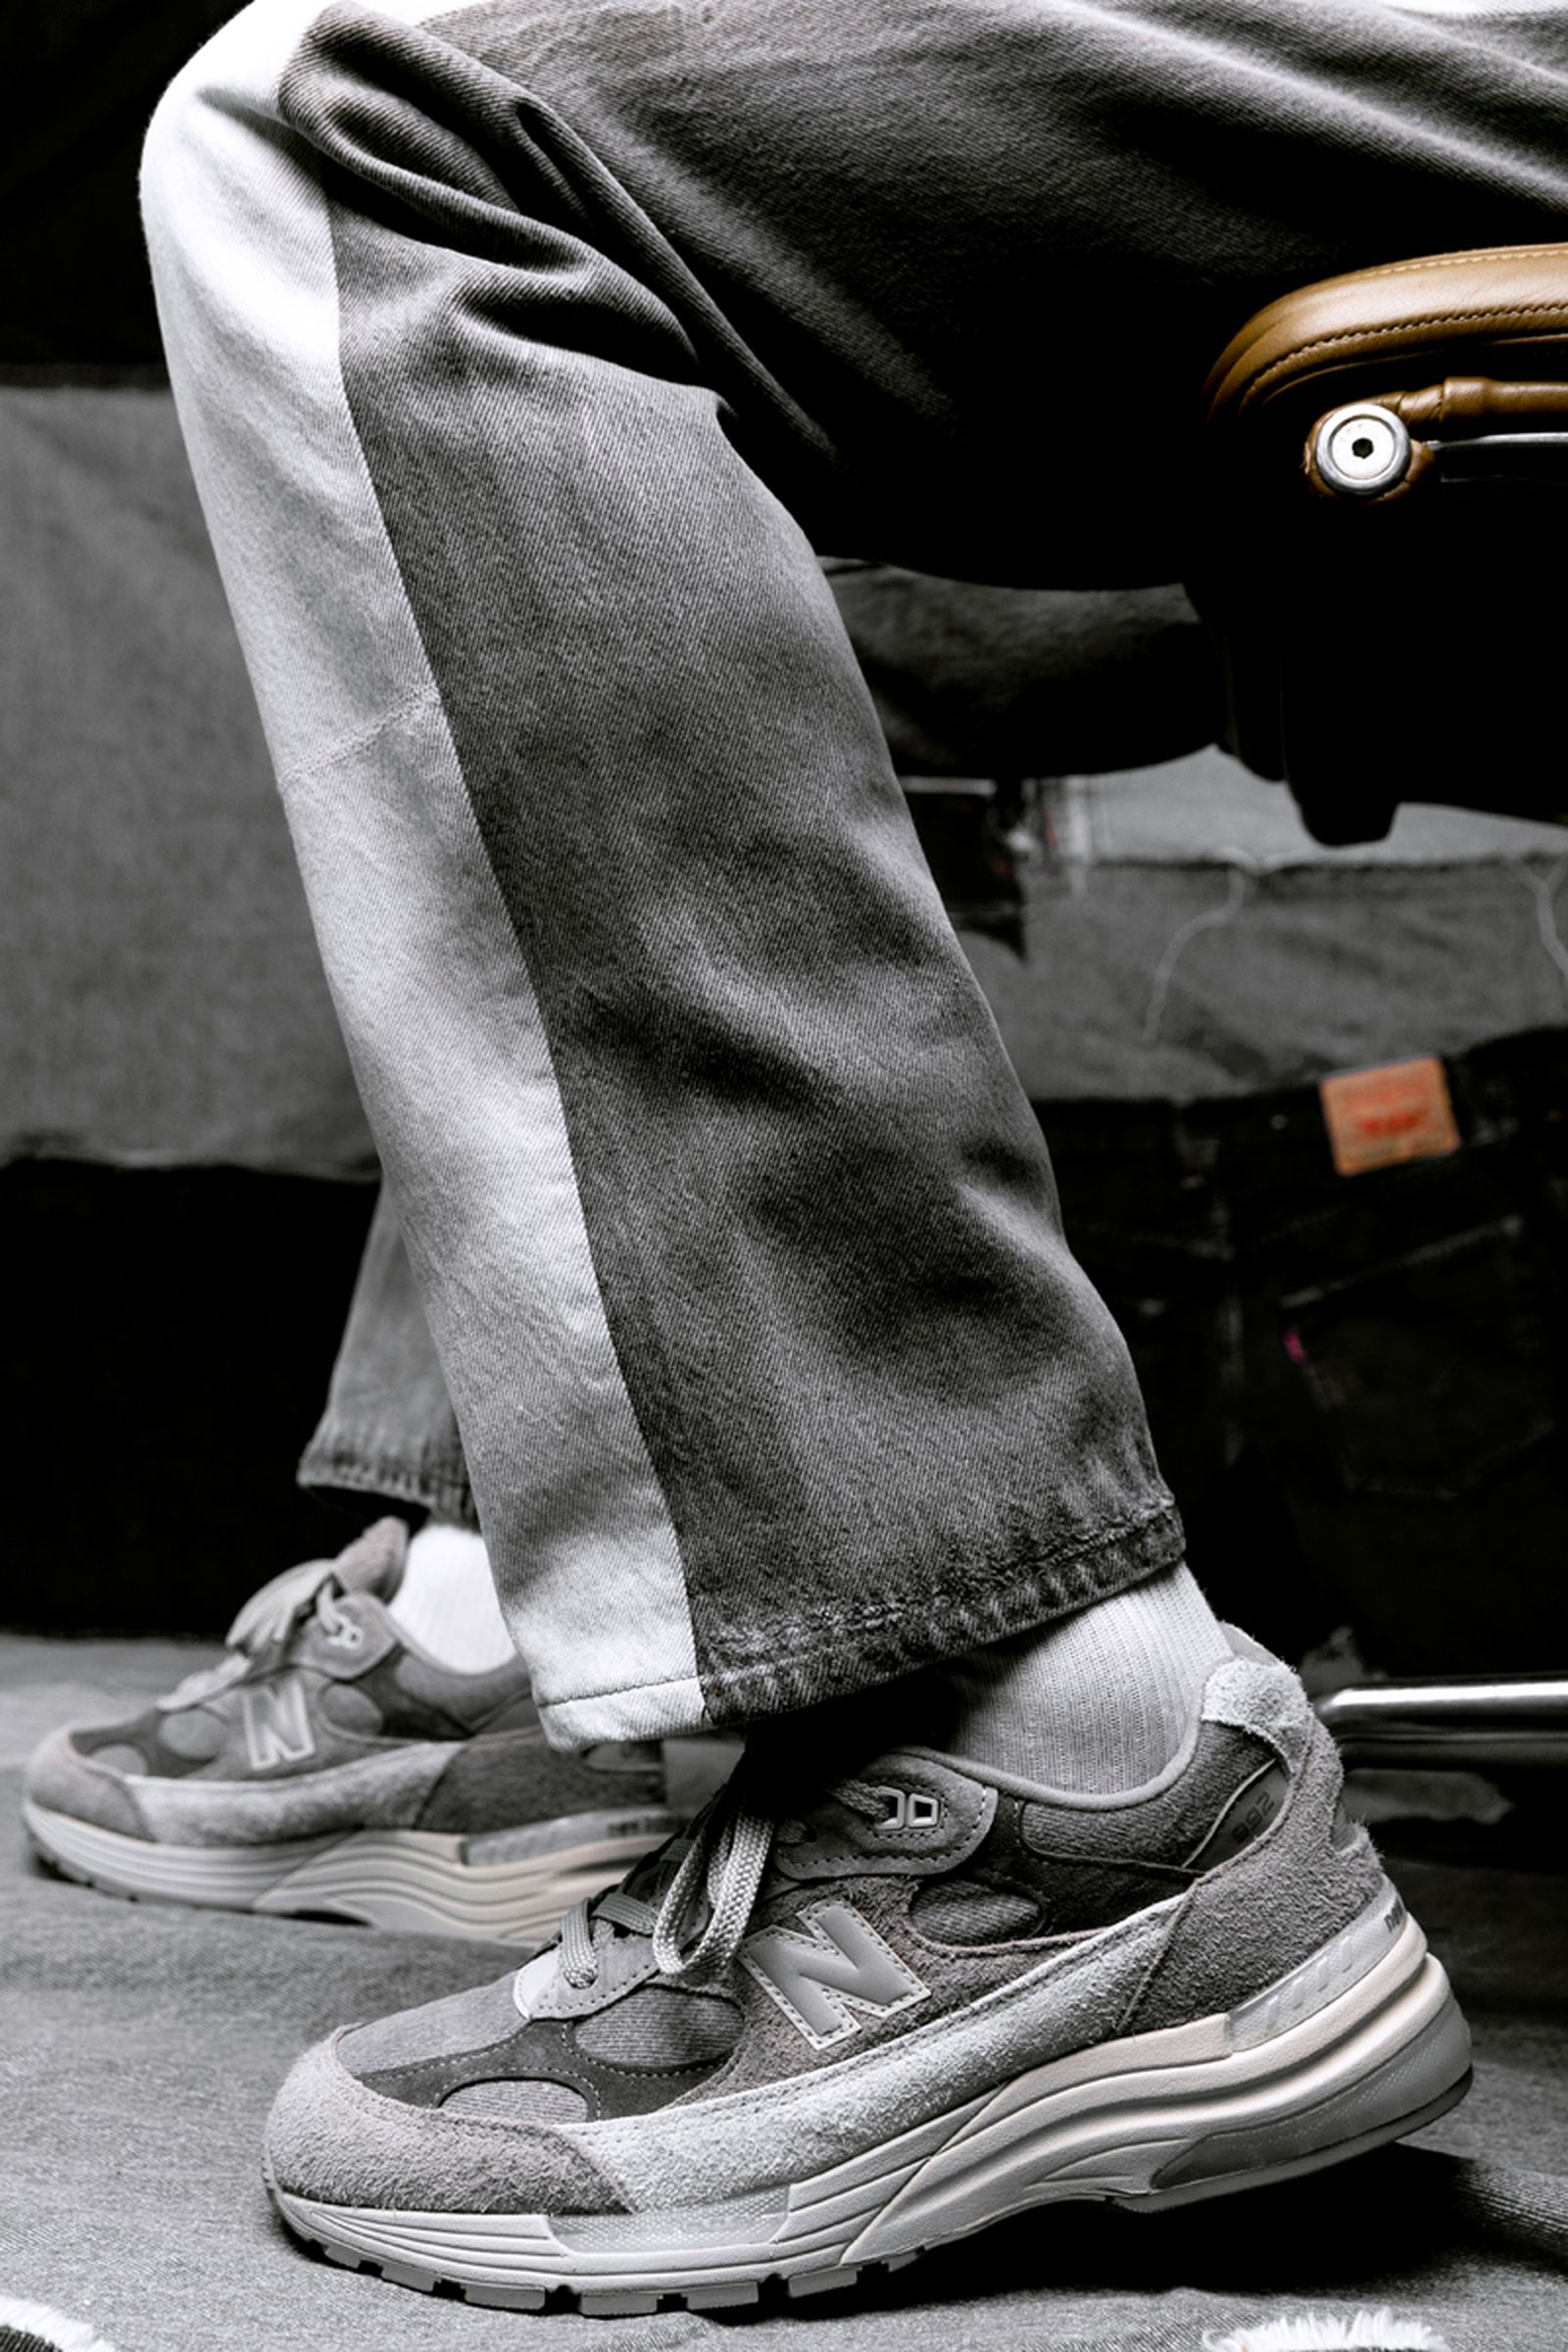 Levi's x New Balance 992 Sneaker, Trucker Jacket, Jeans